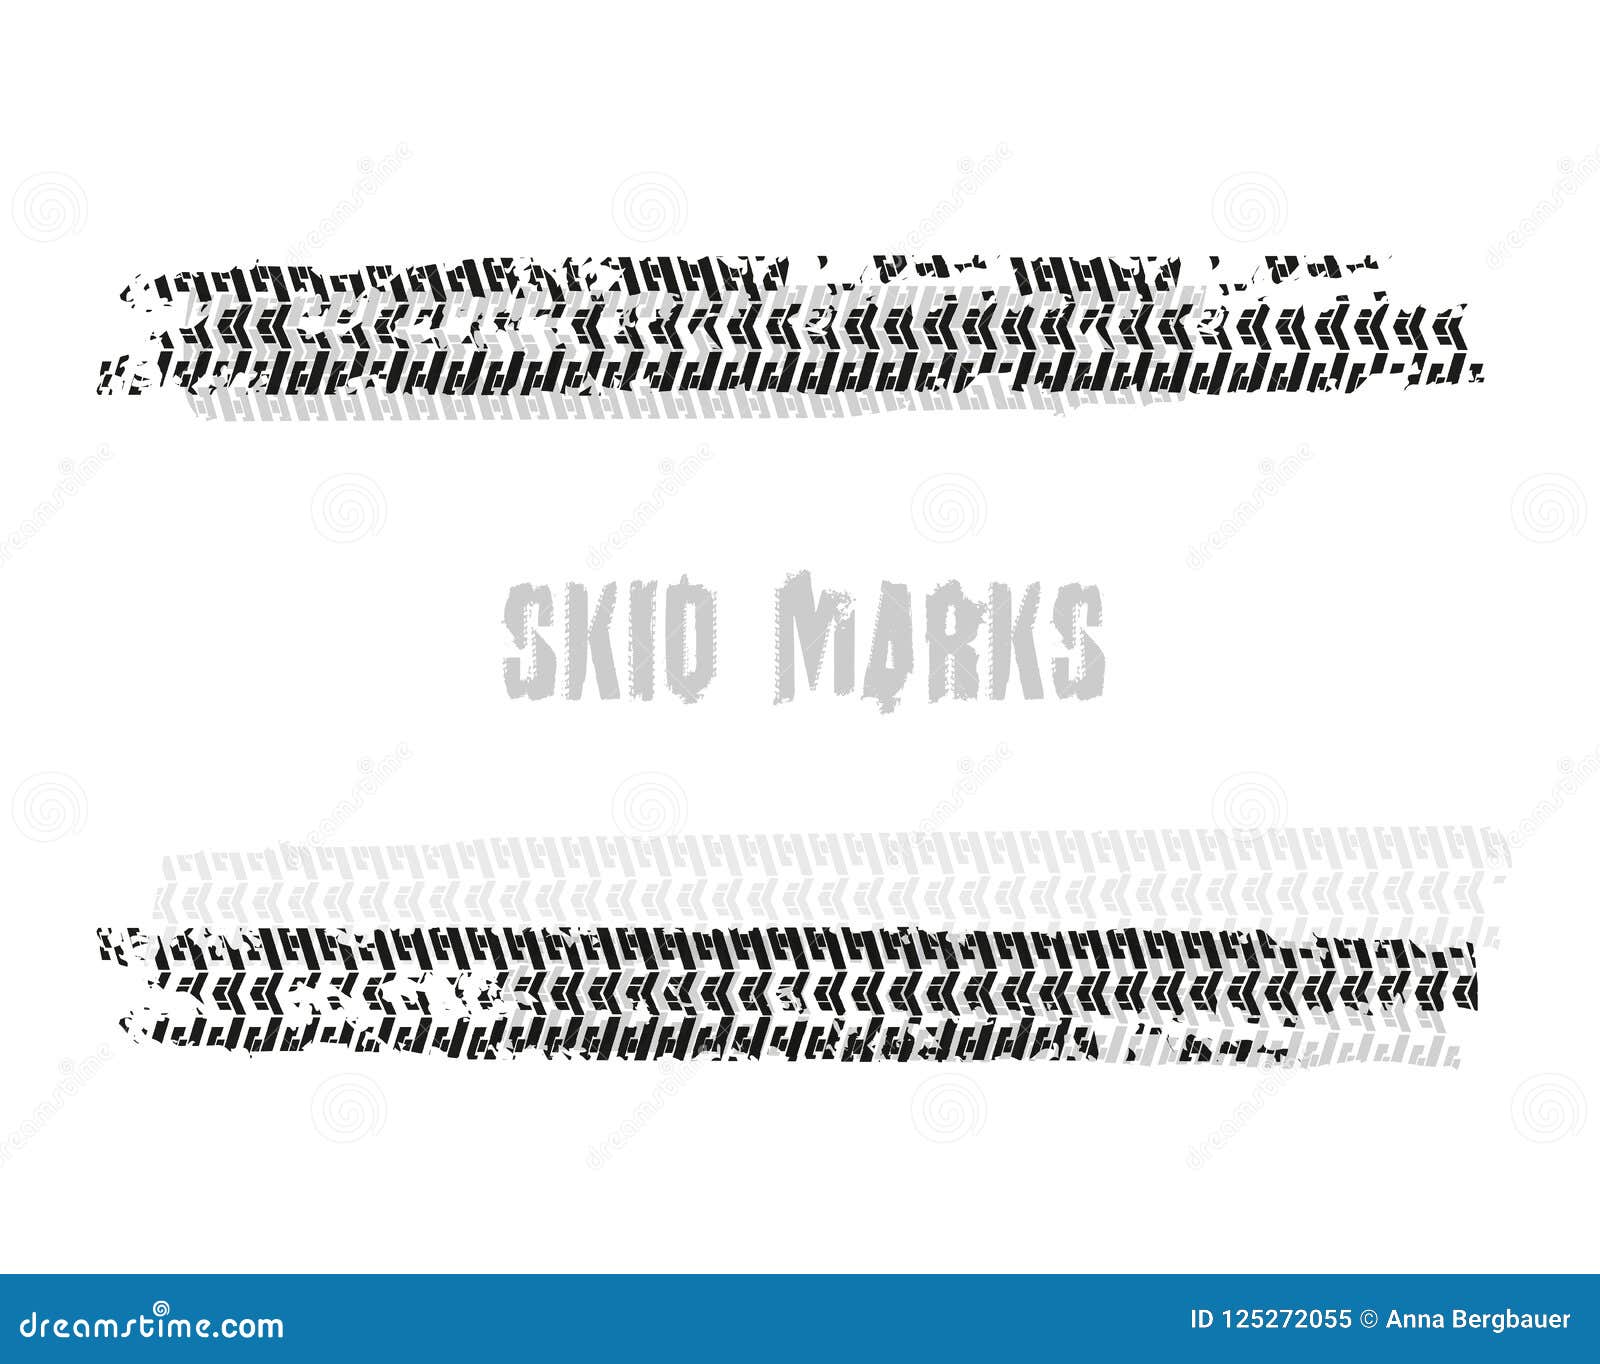 Skid marks-01 Royalty Free Vector Image - VectorStock